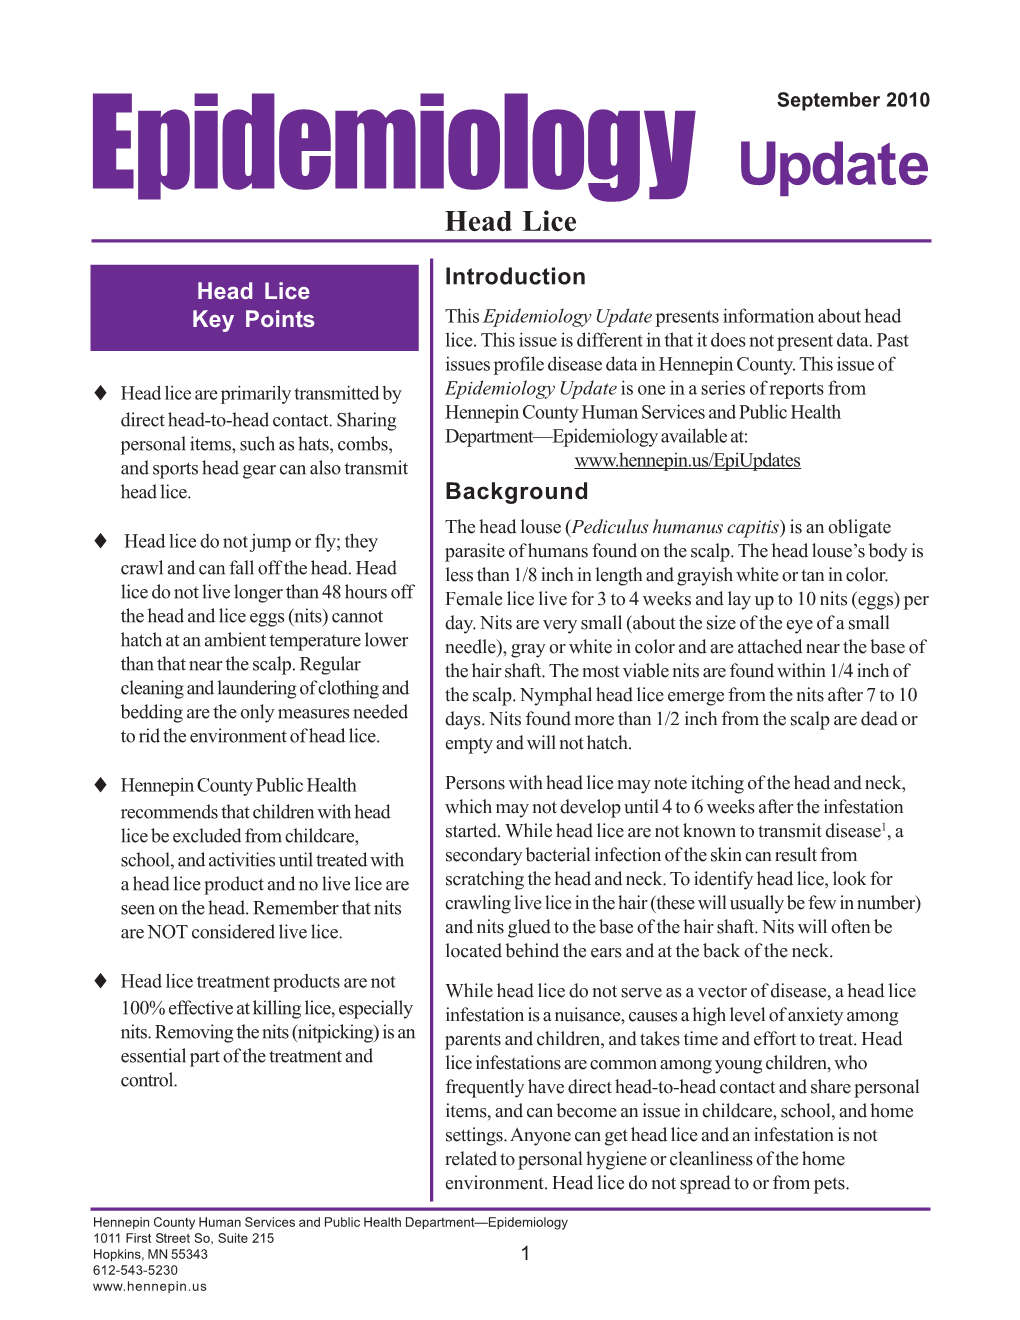 EPI Update Sept 2010-Head Lice.Pmd